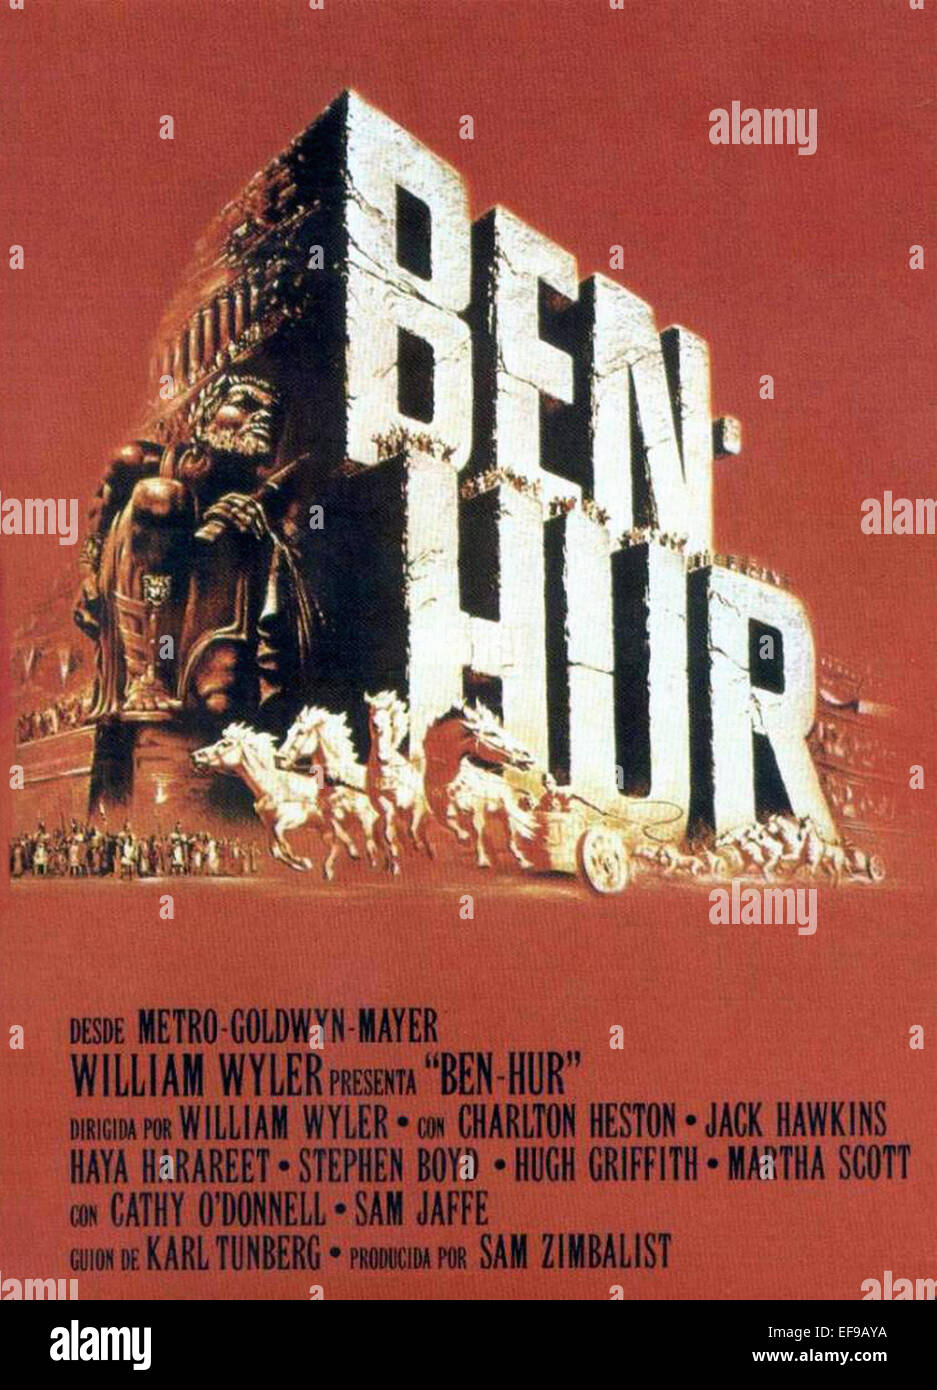 Ben Hur - 1959 - Poster del filmato Foto stock - Alamy